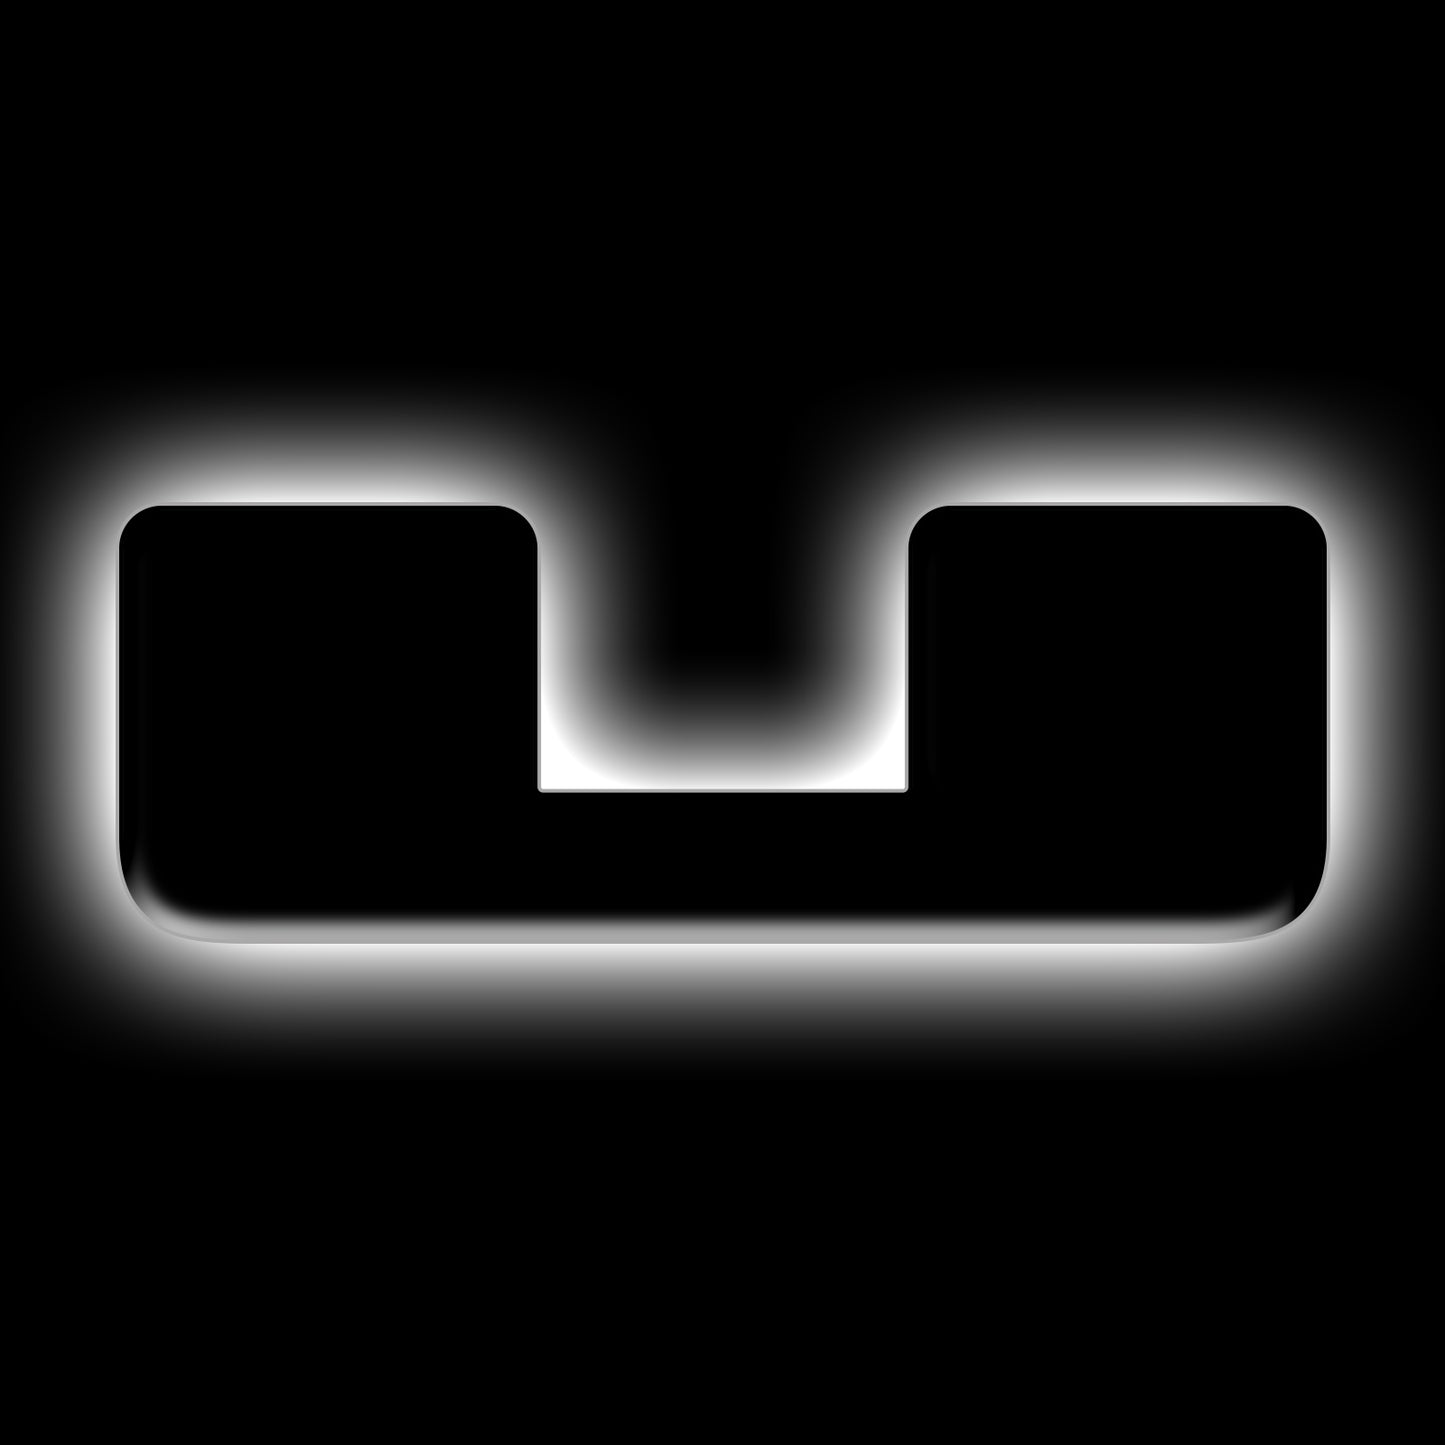 ORACLE Lighting 3141-U-001 Fits 2021-2023 Ford Bronco Universal Illuminated LED Letter Badges - Matte Black Surface Finish - U